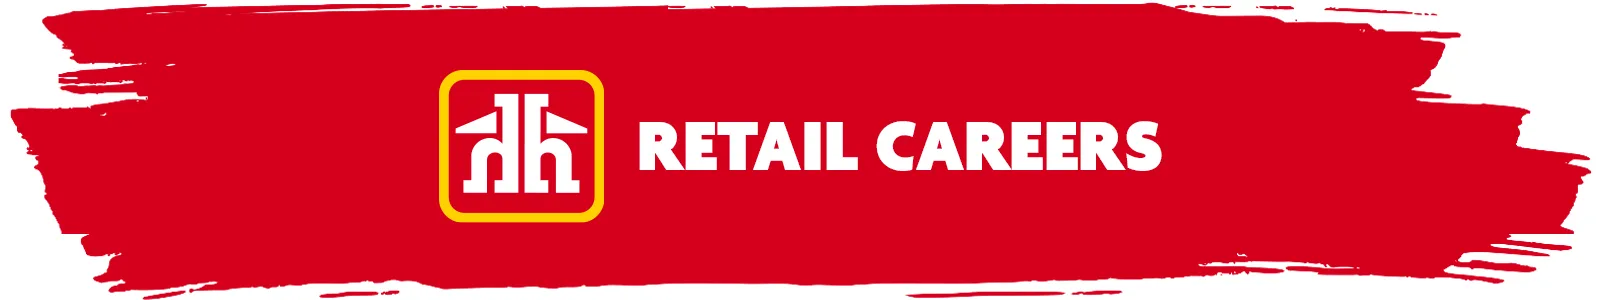 6.1.0 Retail Careers banner